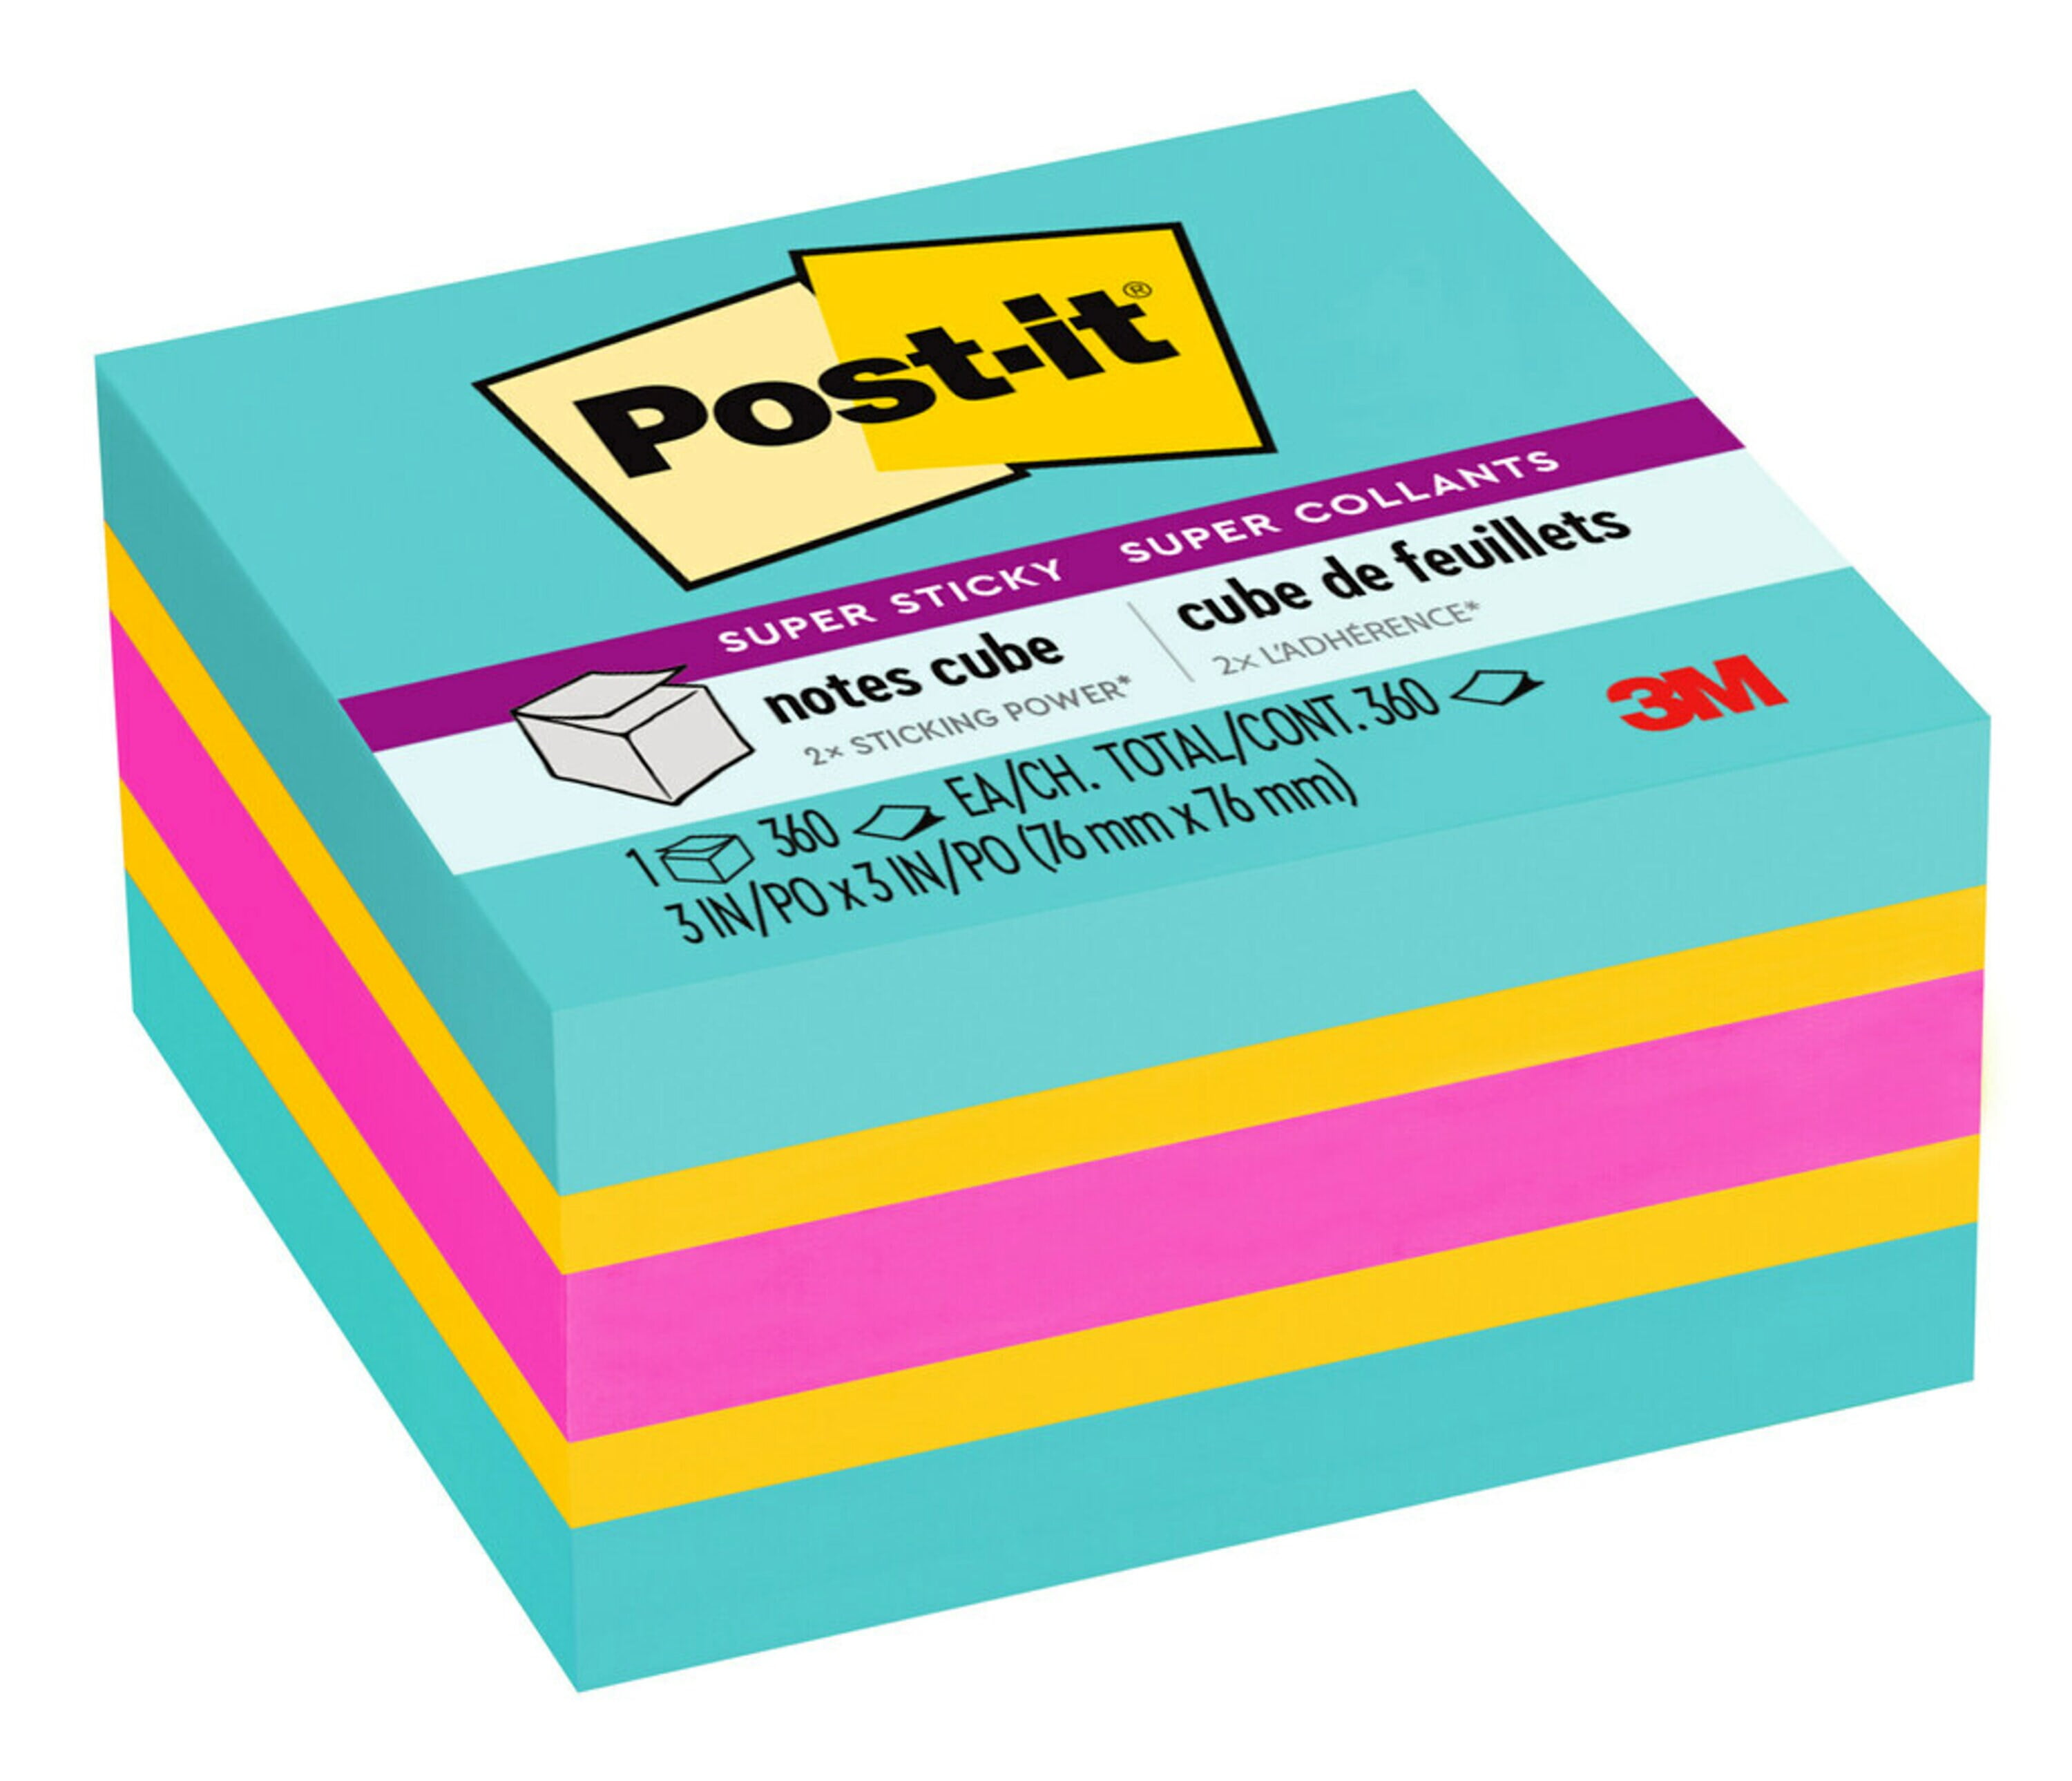 Post-it Mini-cube Notes repositionnables 51 x 51 mm Citron